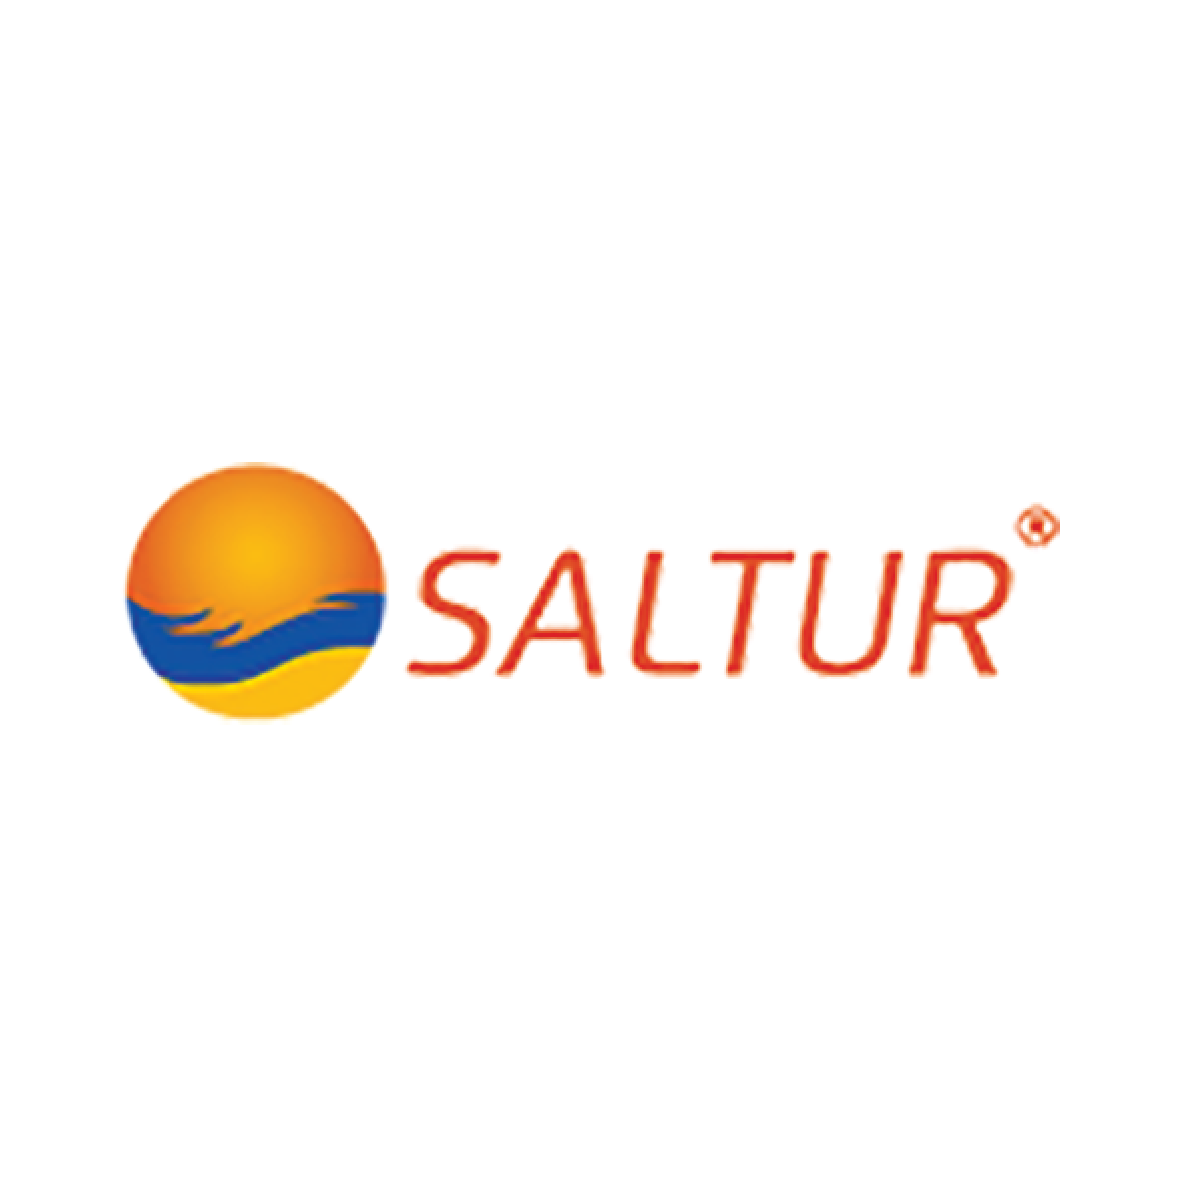 saltur-01